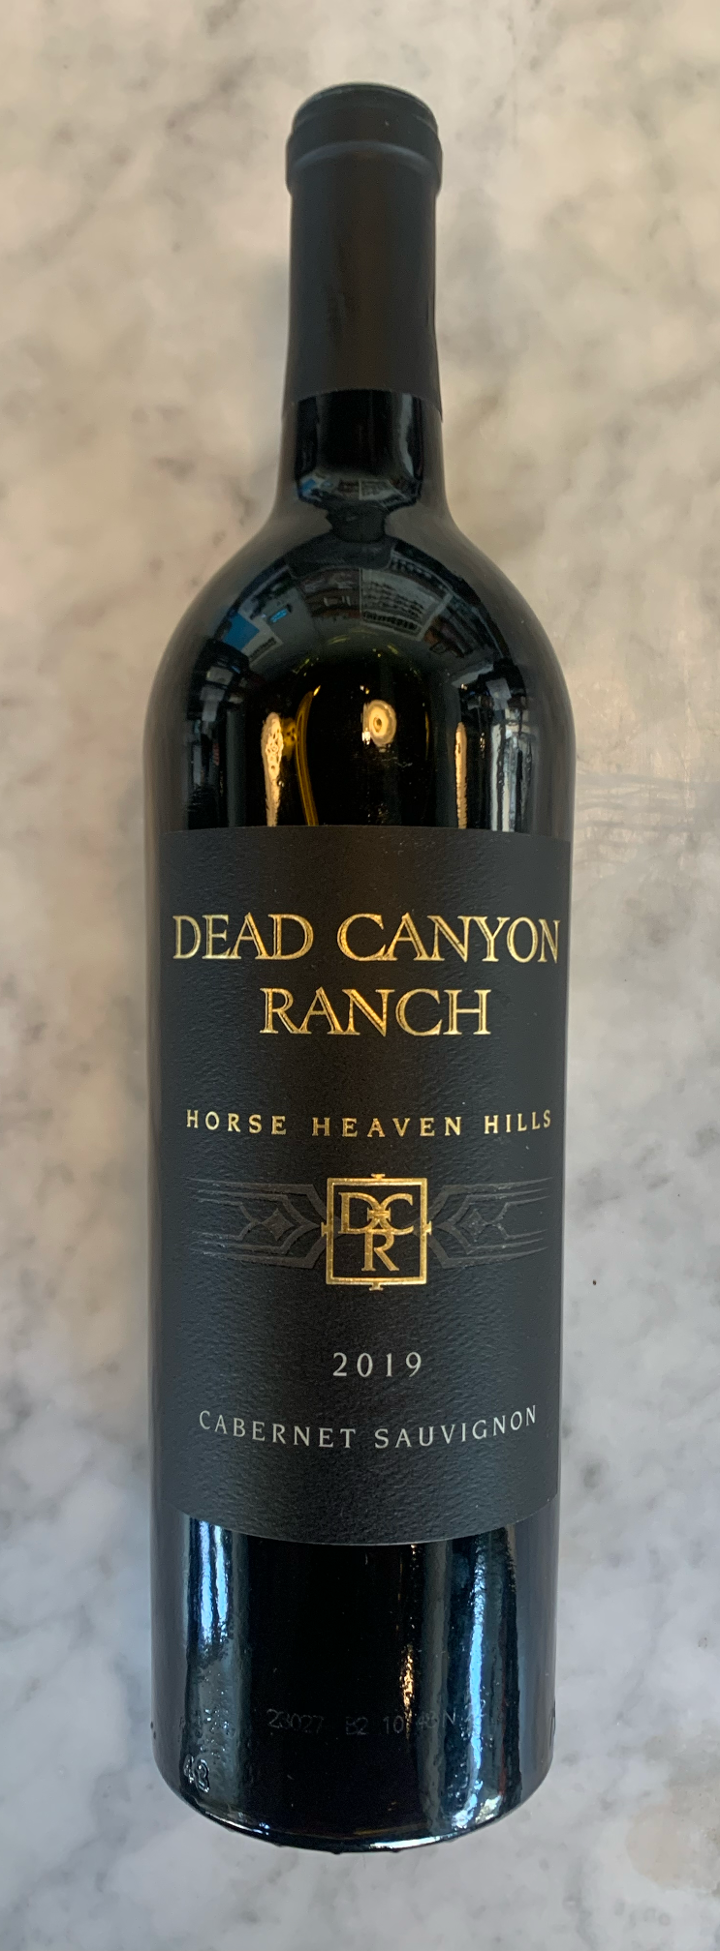 Dead Canyon Ranch Cabernet SauvignonBTL